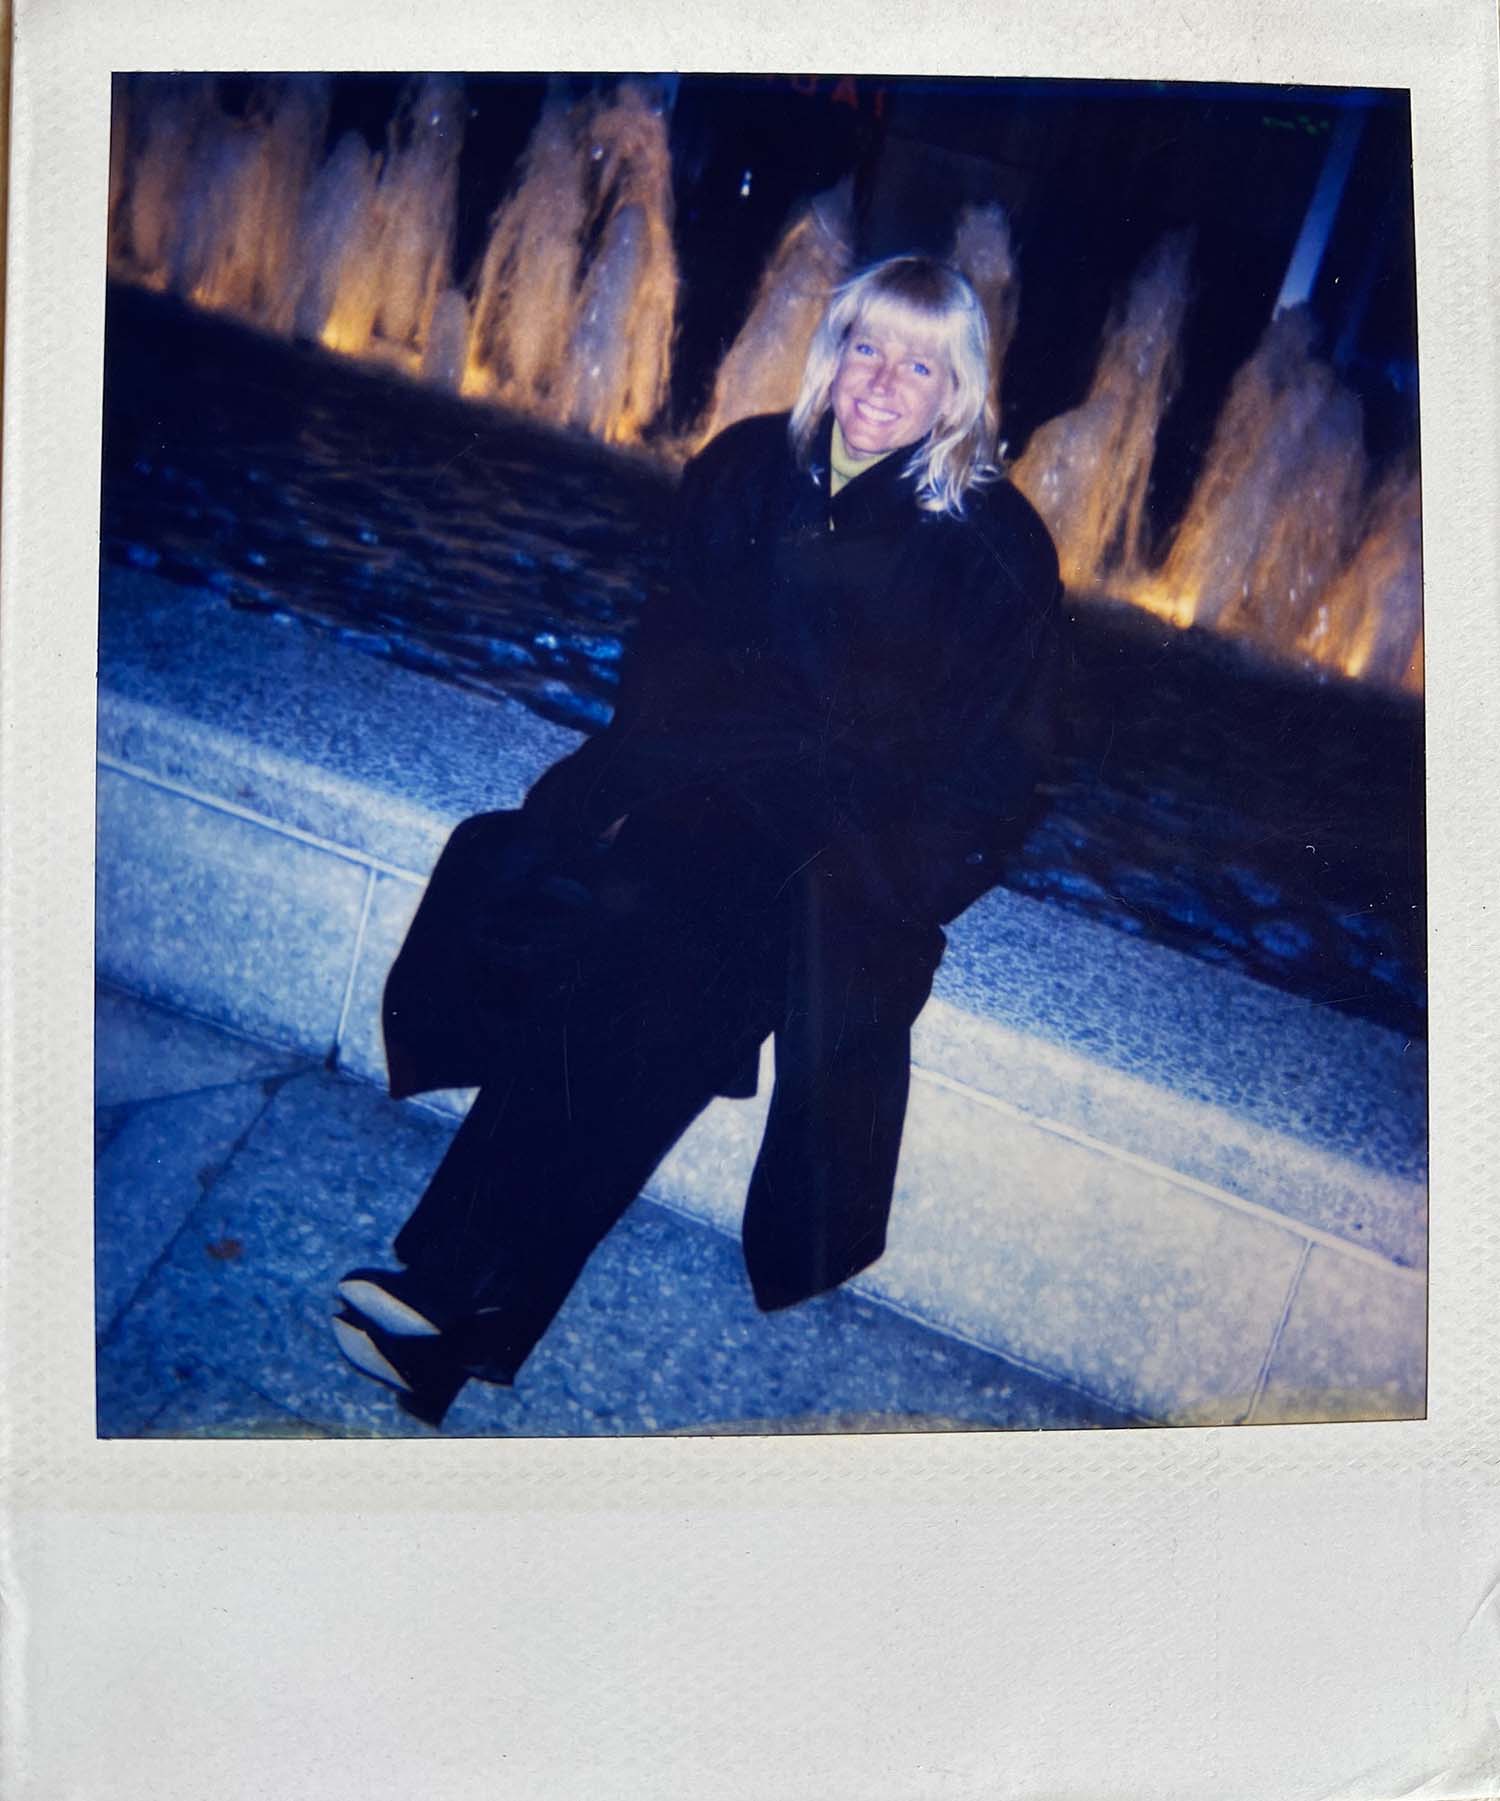 Polaroids raras mostram a intimidade de Xuxa Meneghel